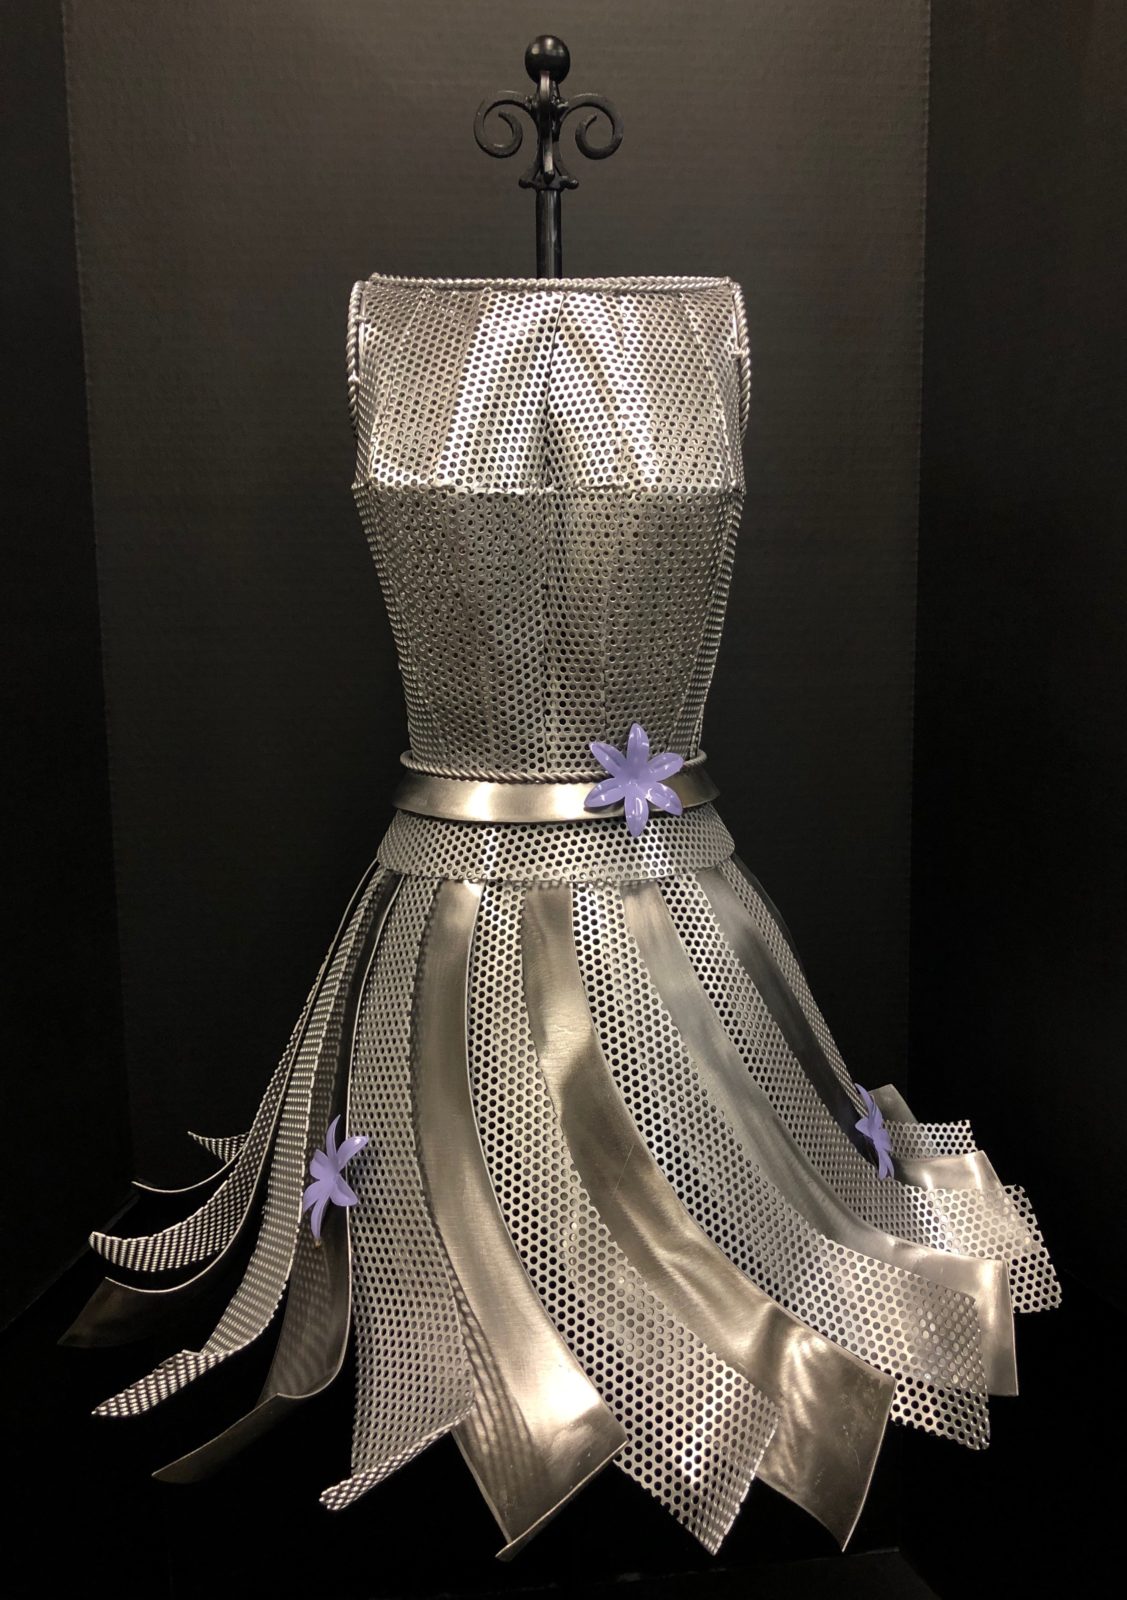 Gidget's Party Dress Metal Sculpture